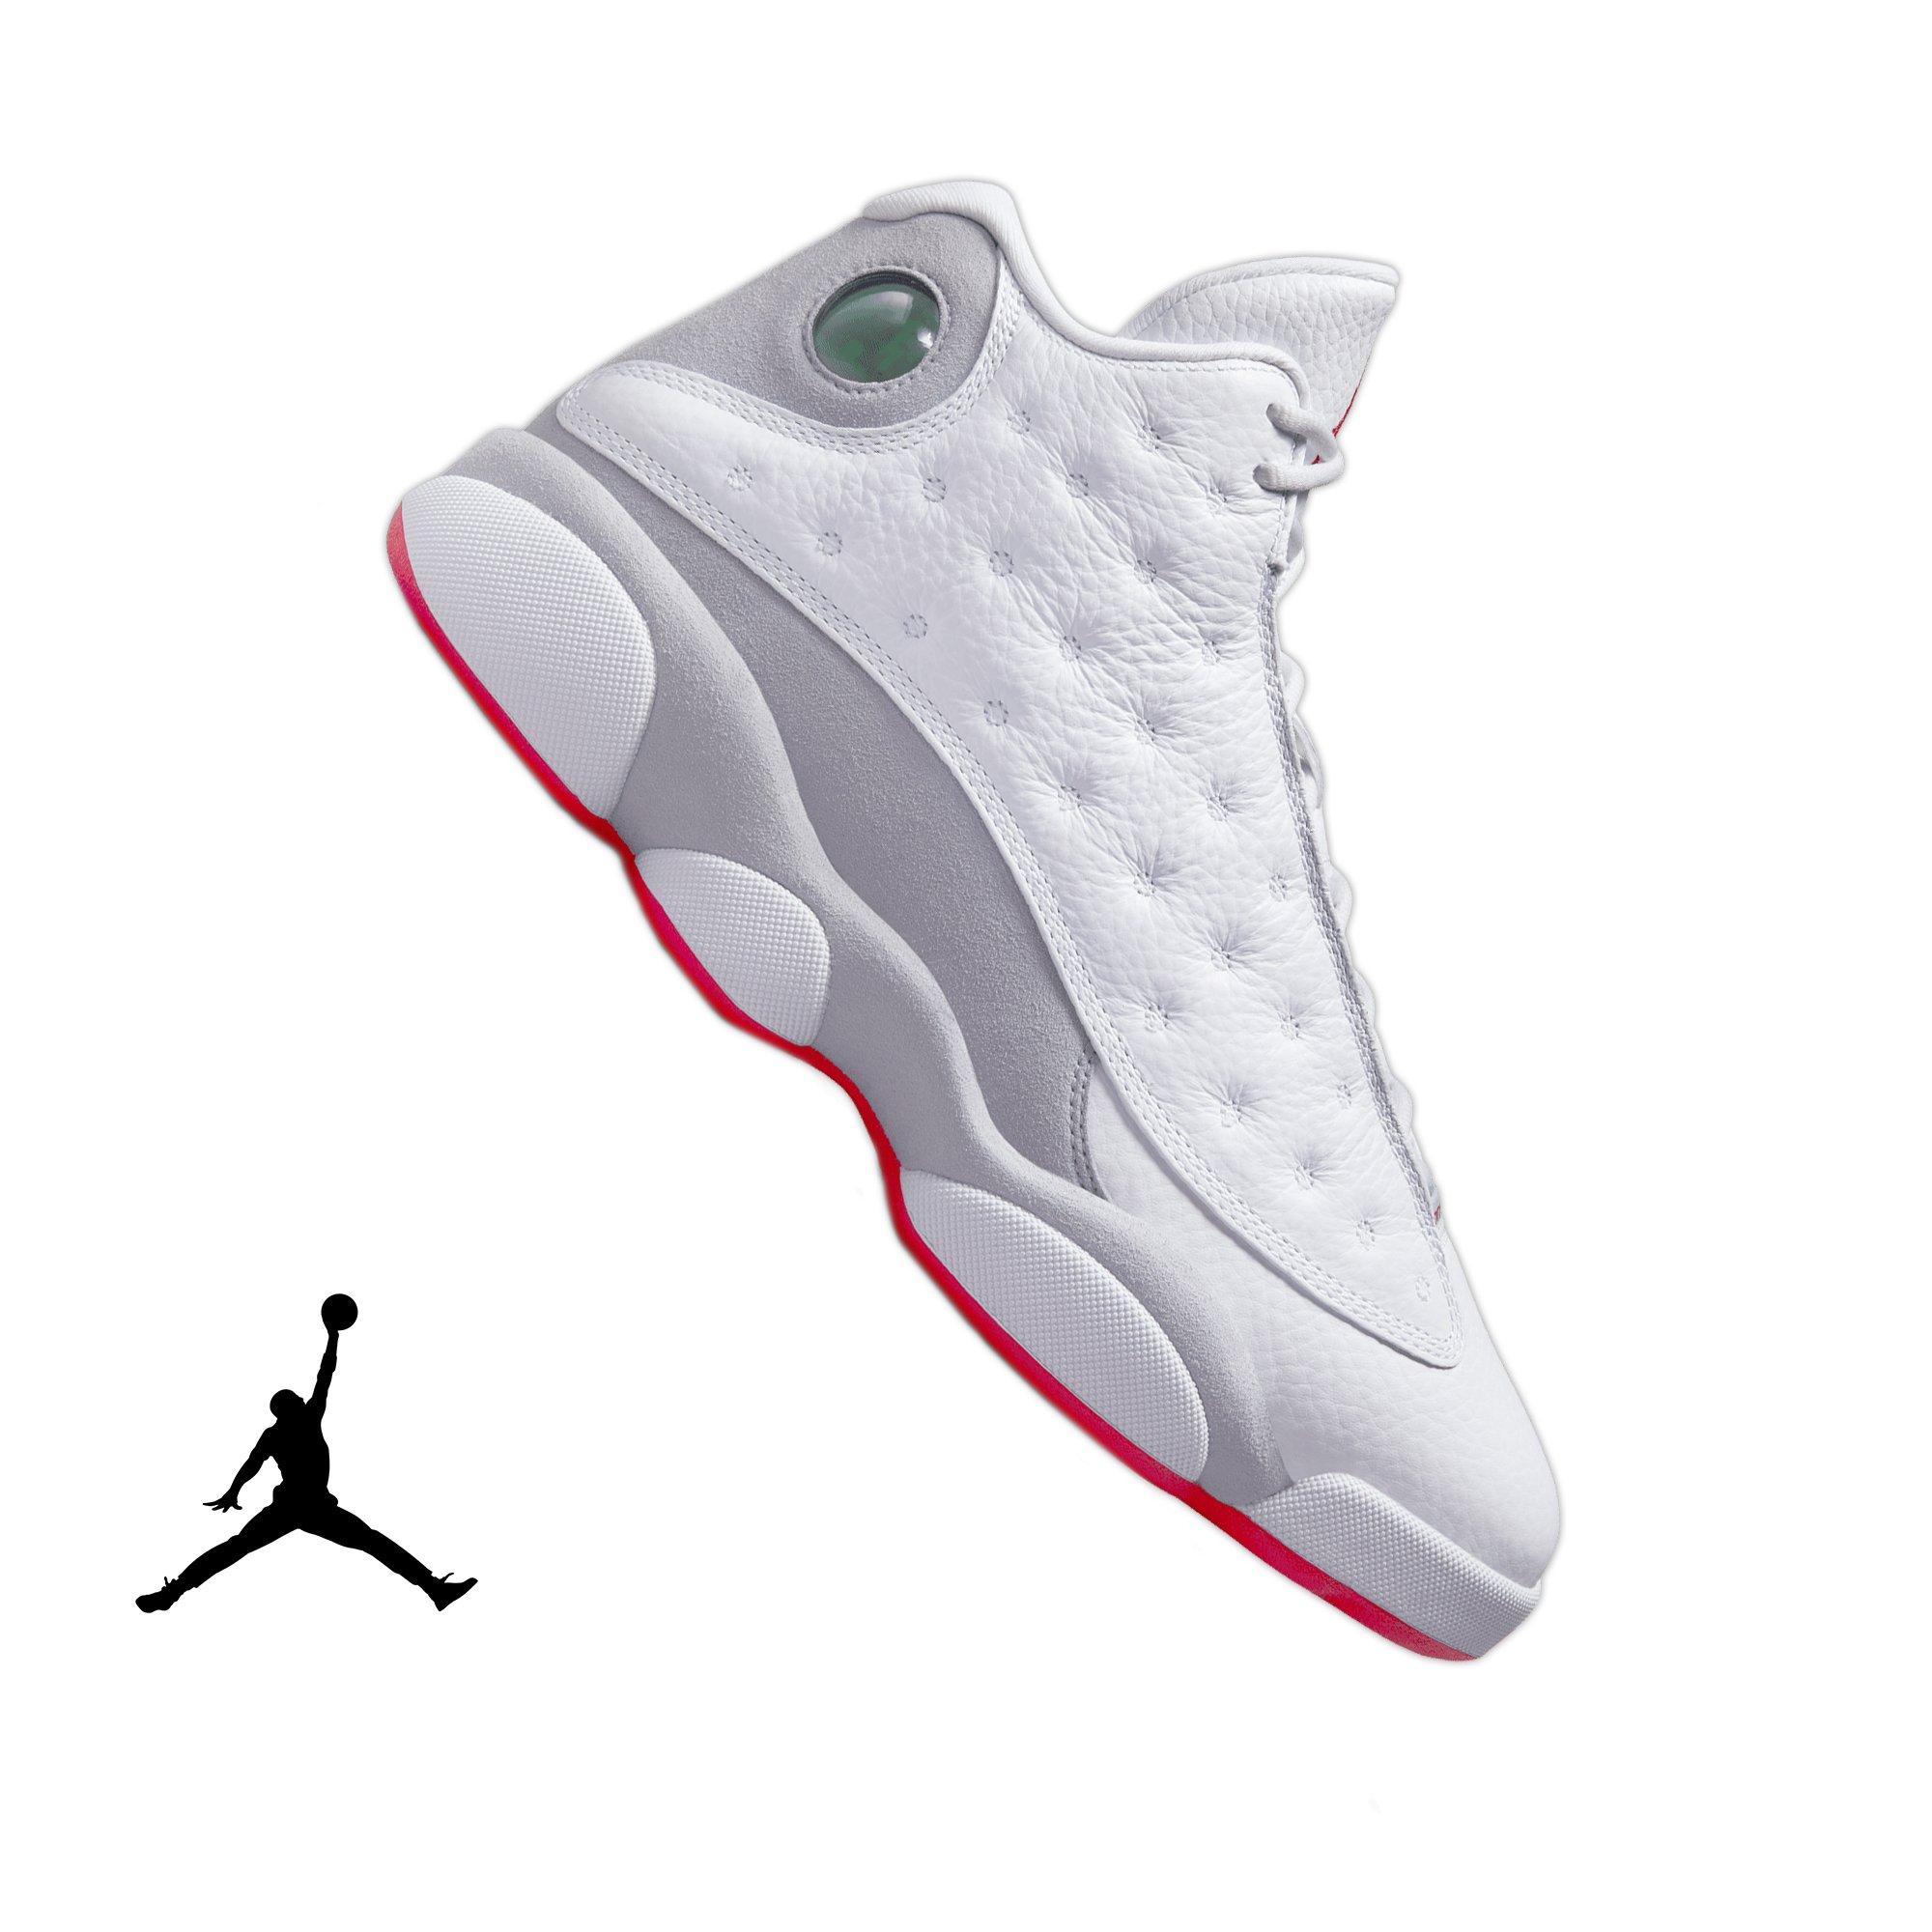 Jordan White Shoes.